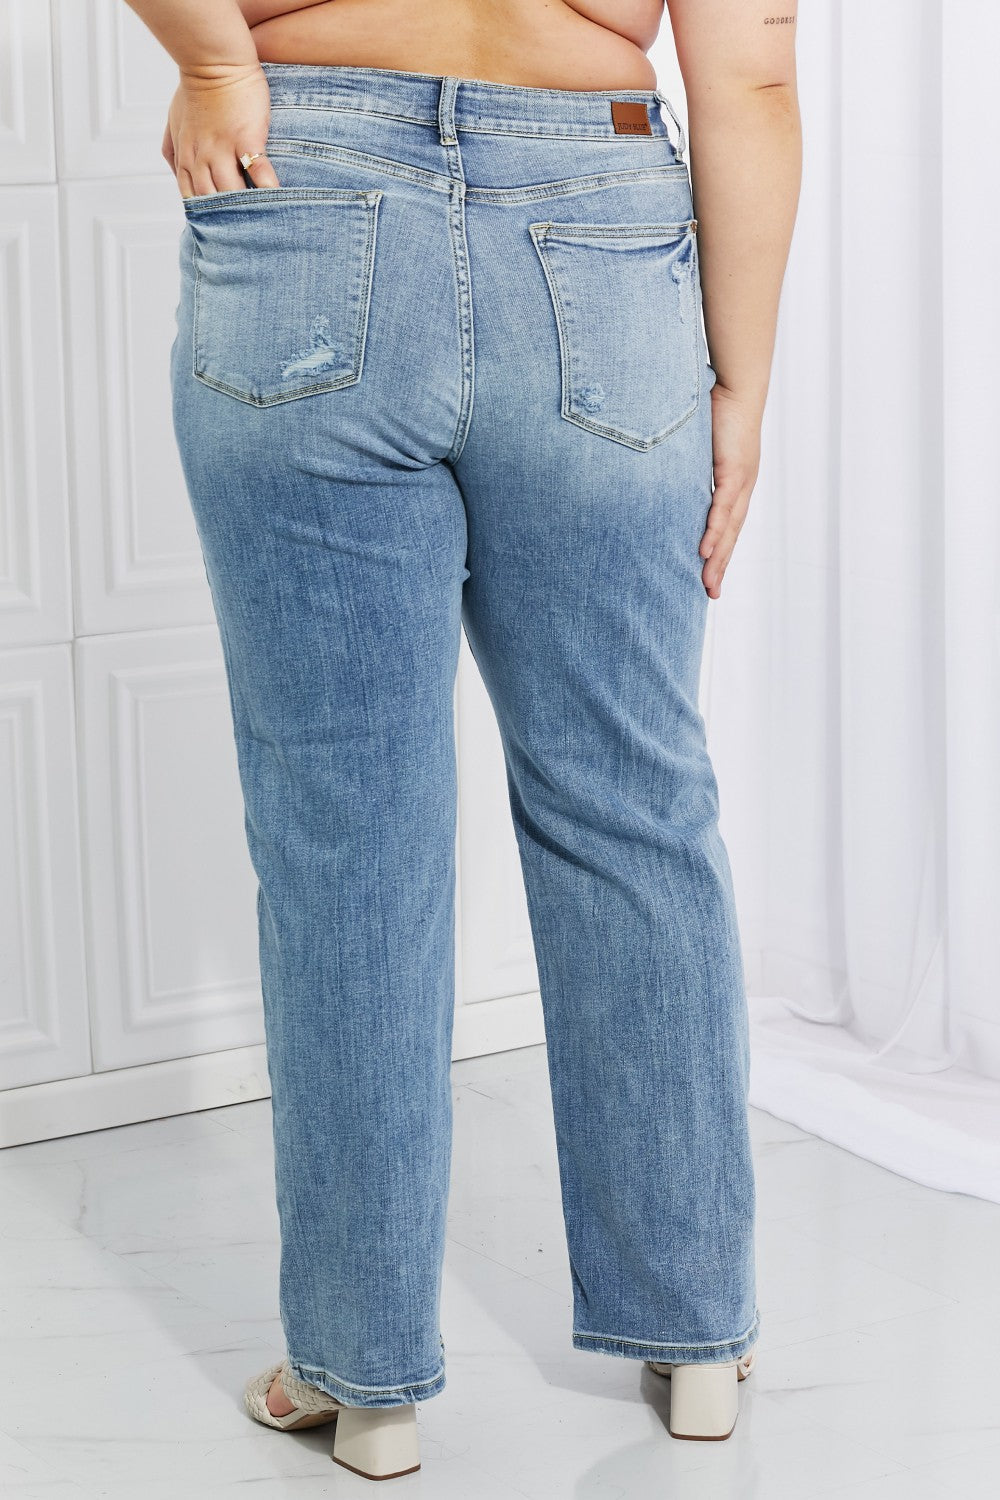 Back View, Plus Size, Judy Blue Full Size Rachel Jeans Style 82407